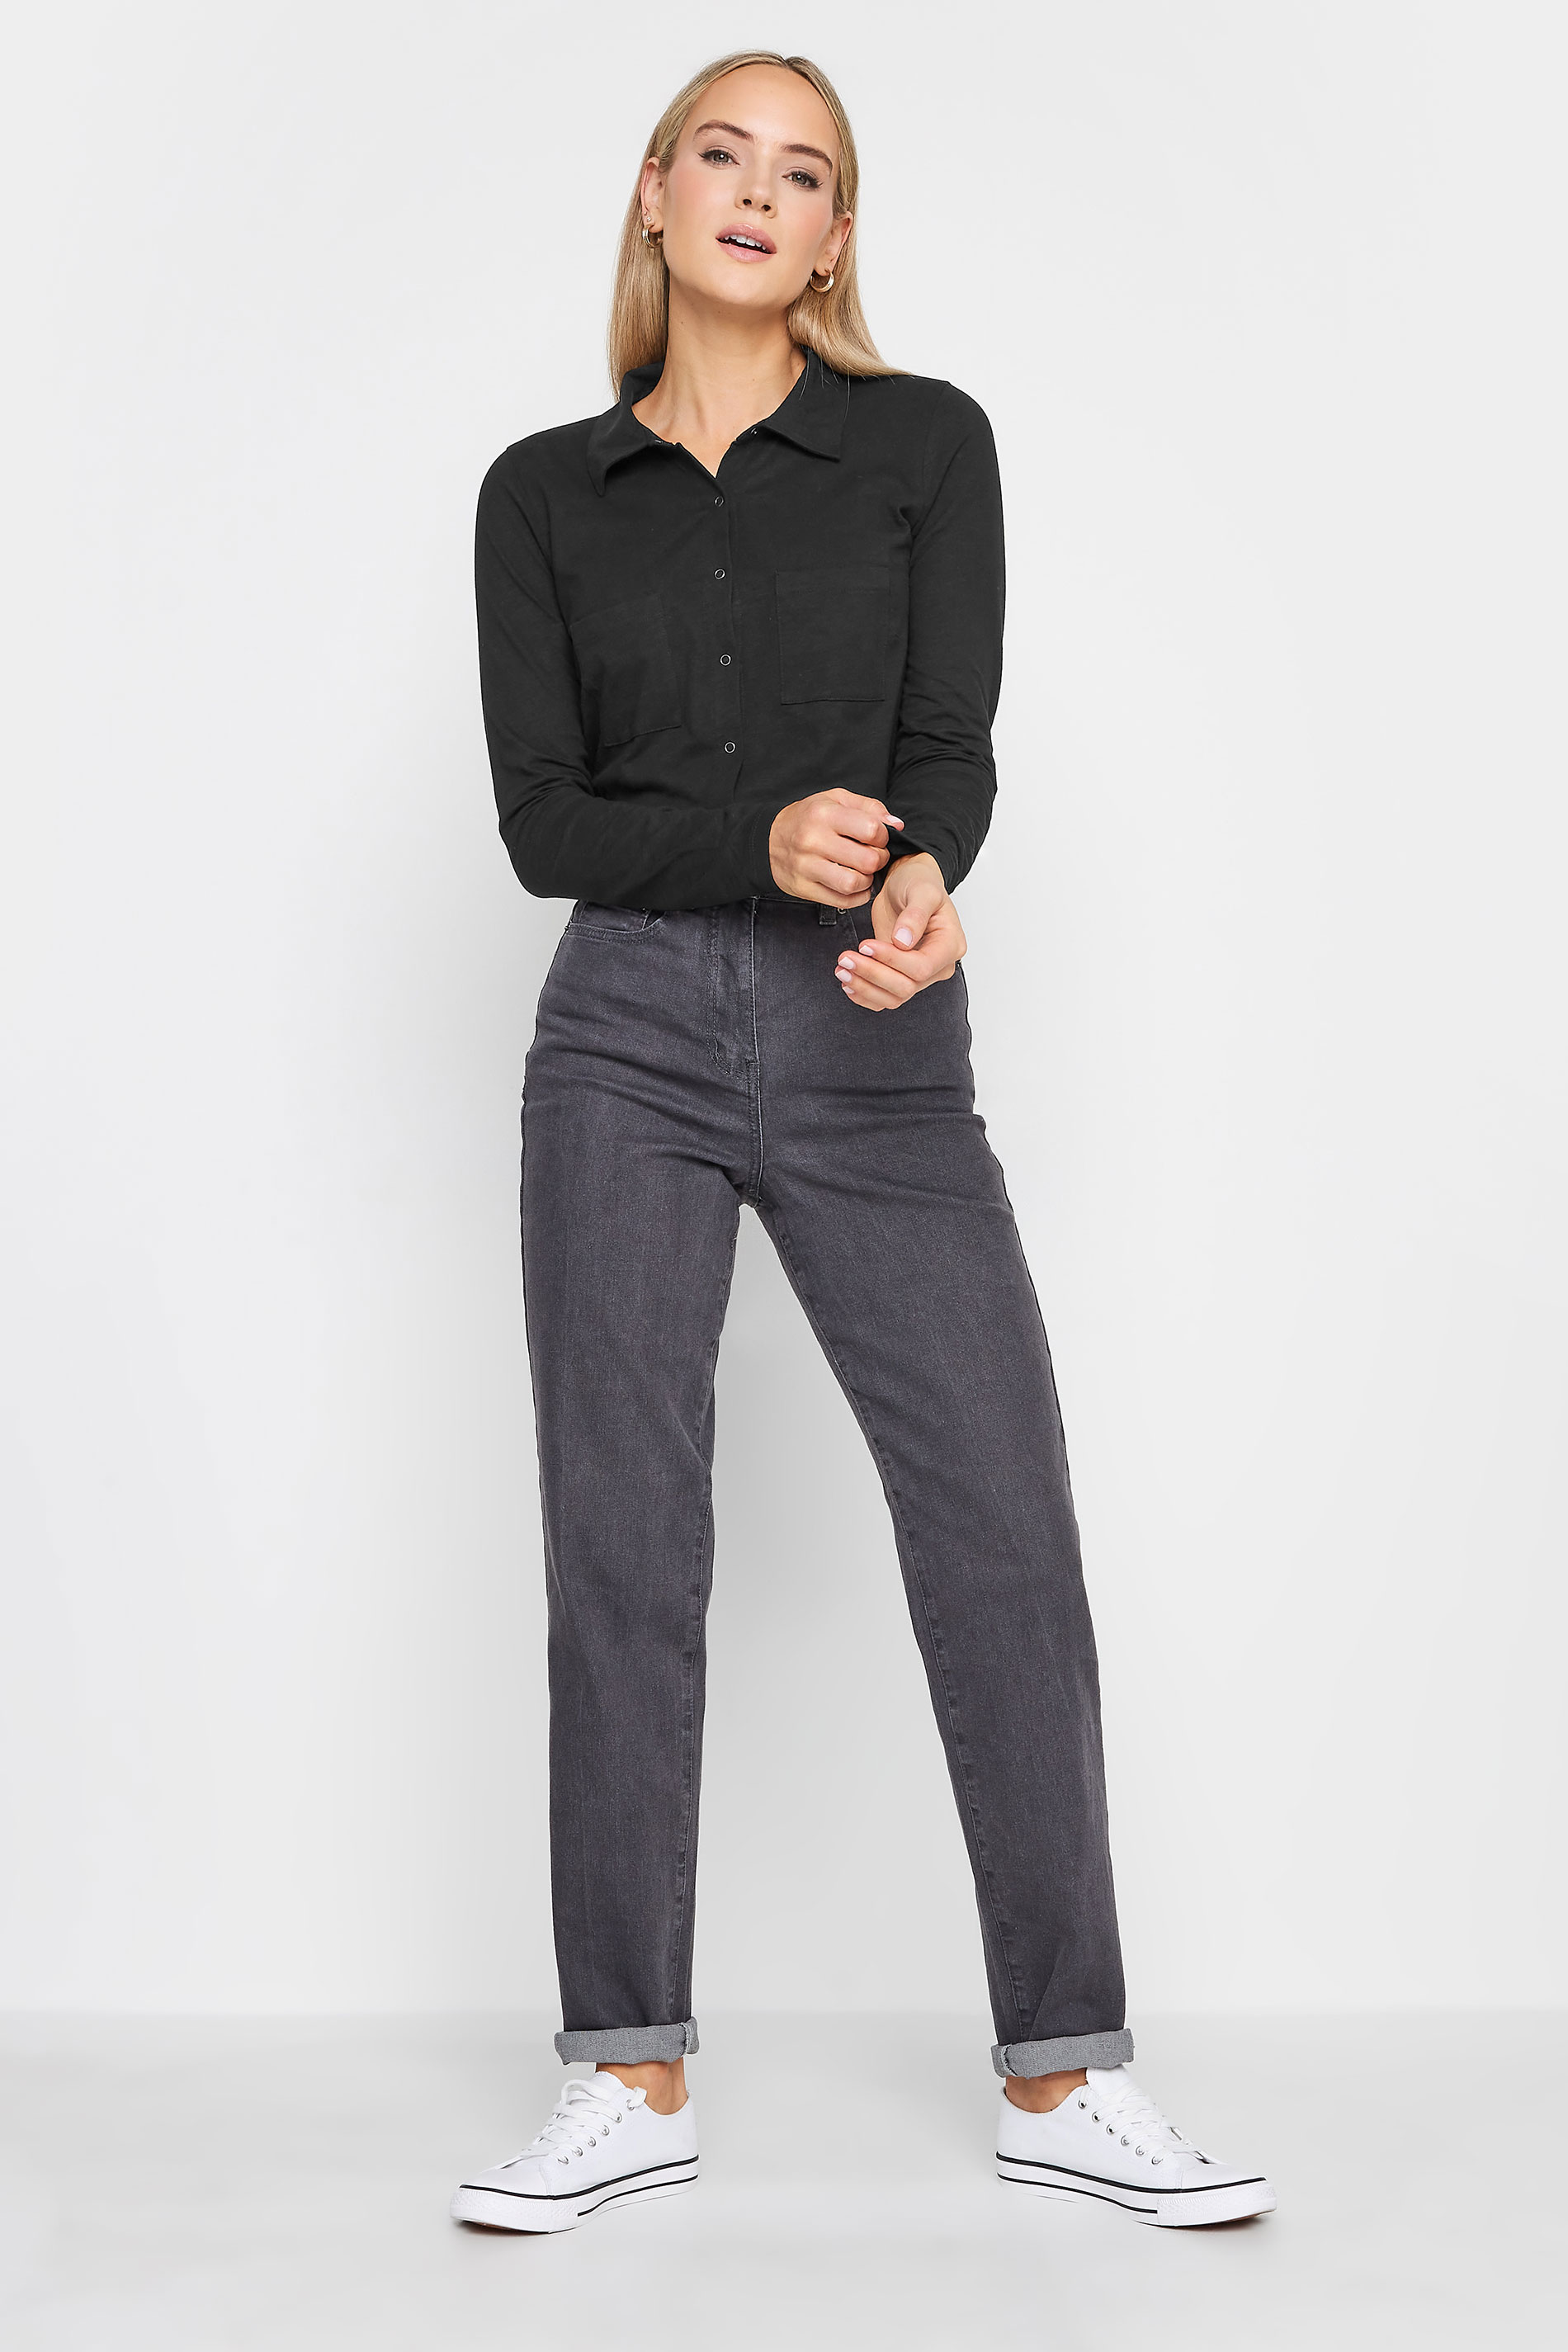 LTS Tall Women's Black Cotton Shirt | Long Tall Sally 2